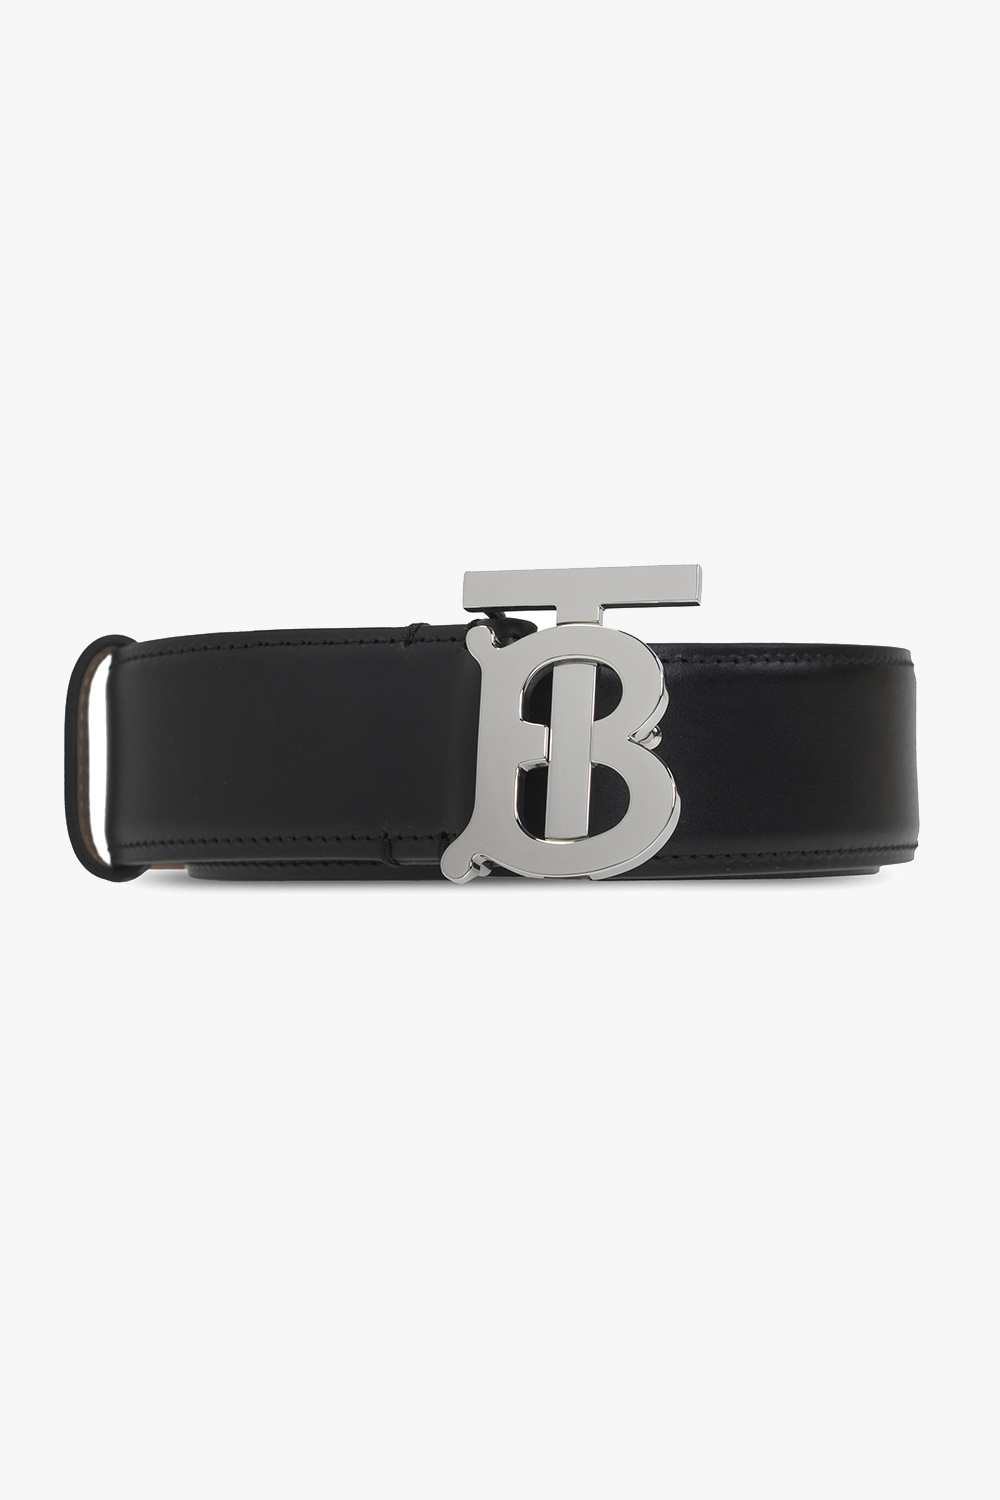 Burberry Ladies Black / Palladio TB Monogram Buckle Leather Belt